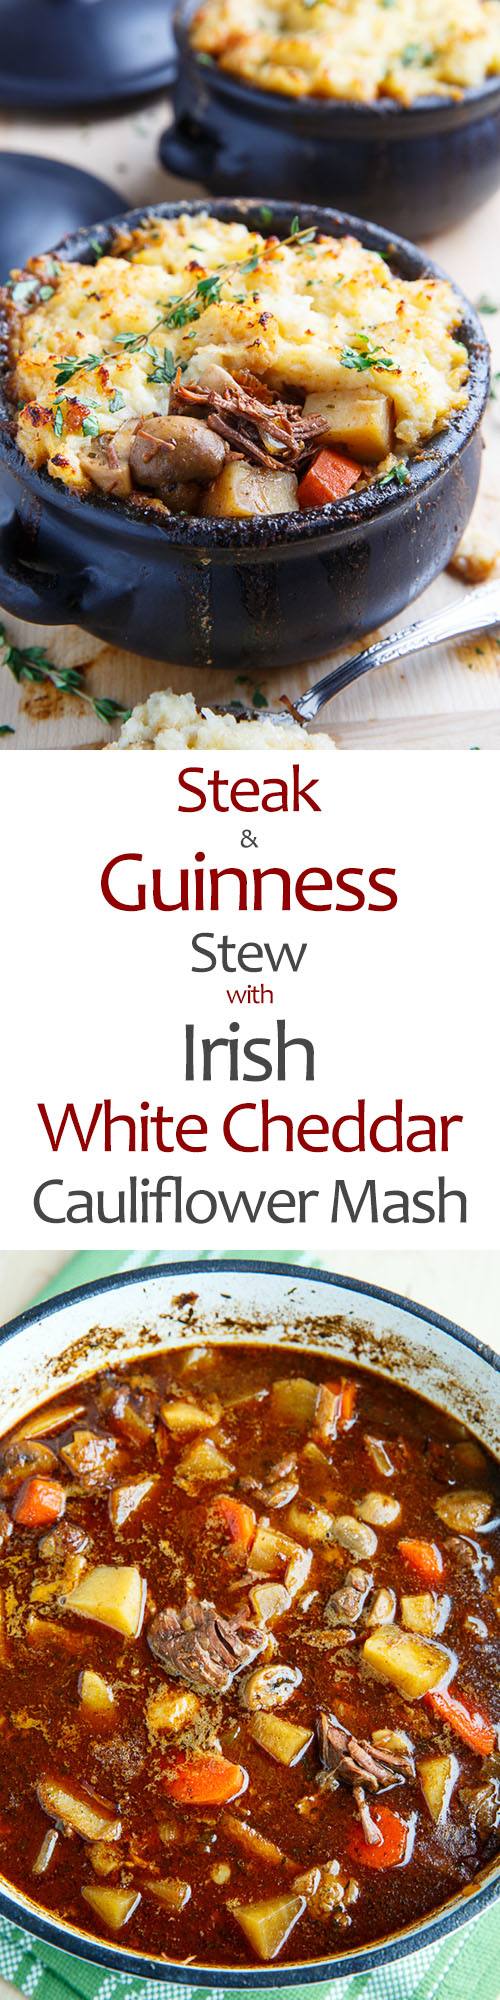 Steak and Guinness Stew with Irish White Cheddar Cauliflower Mash